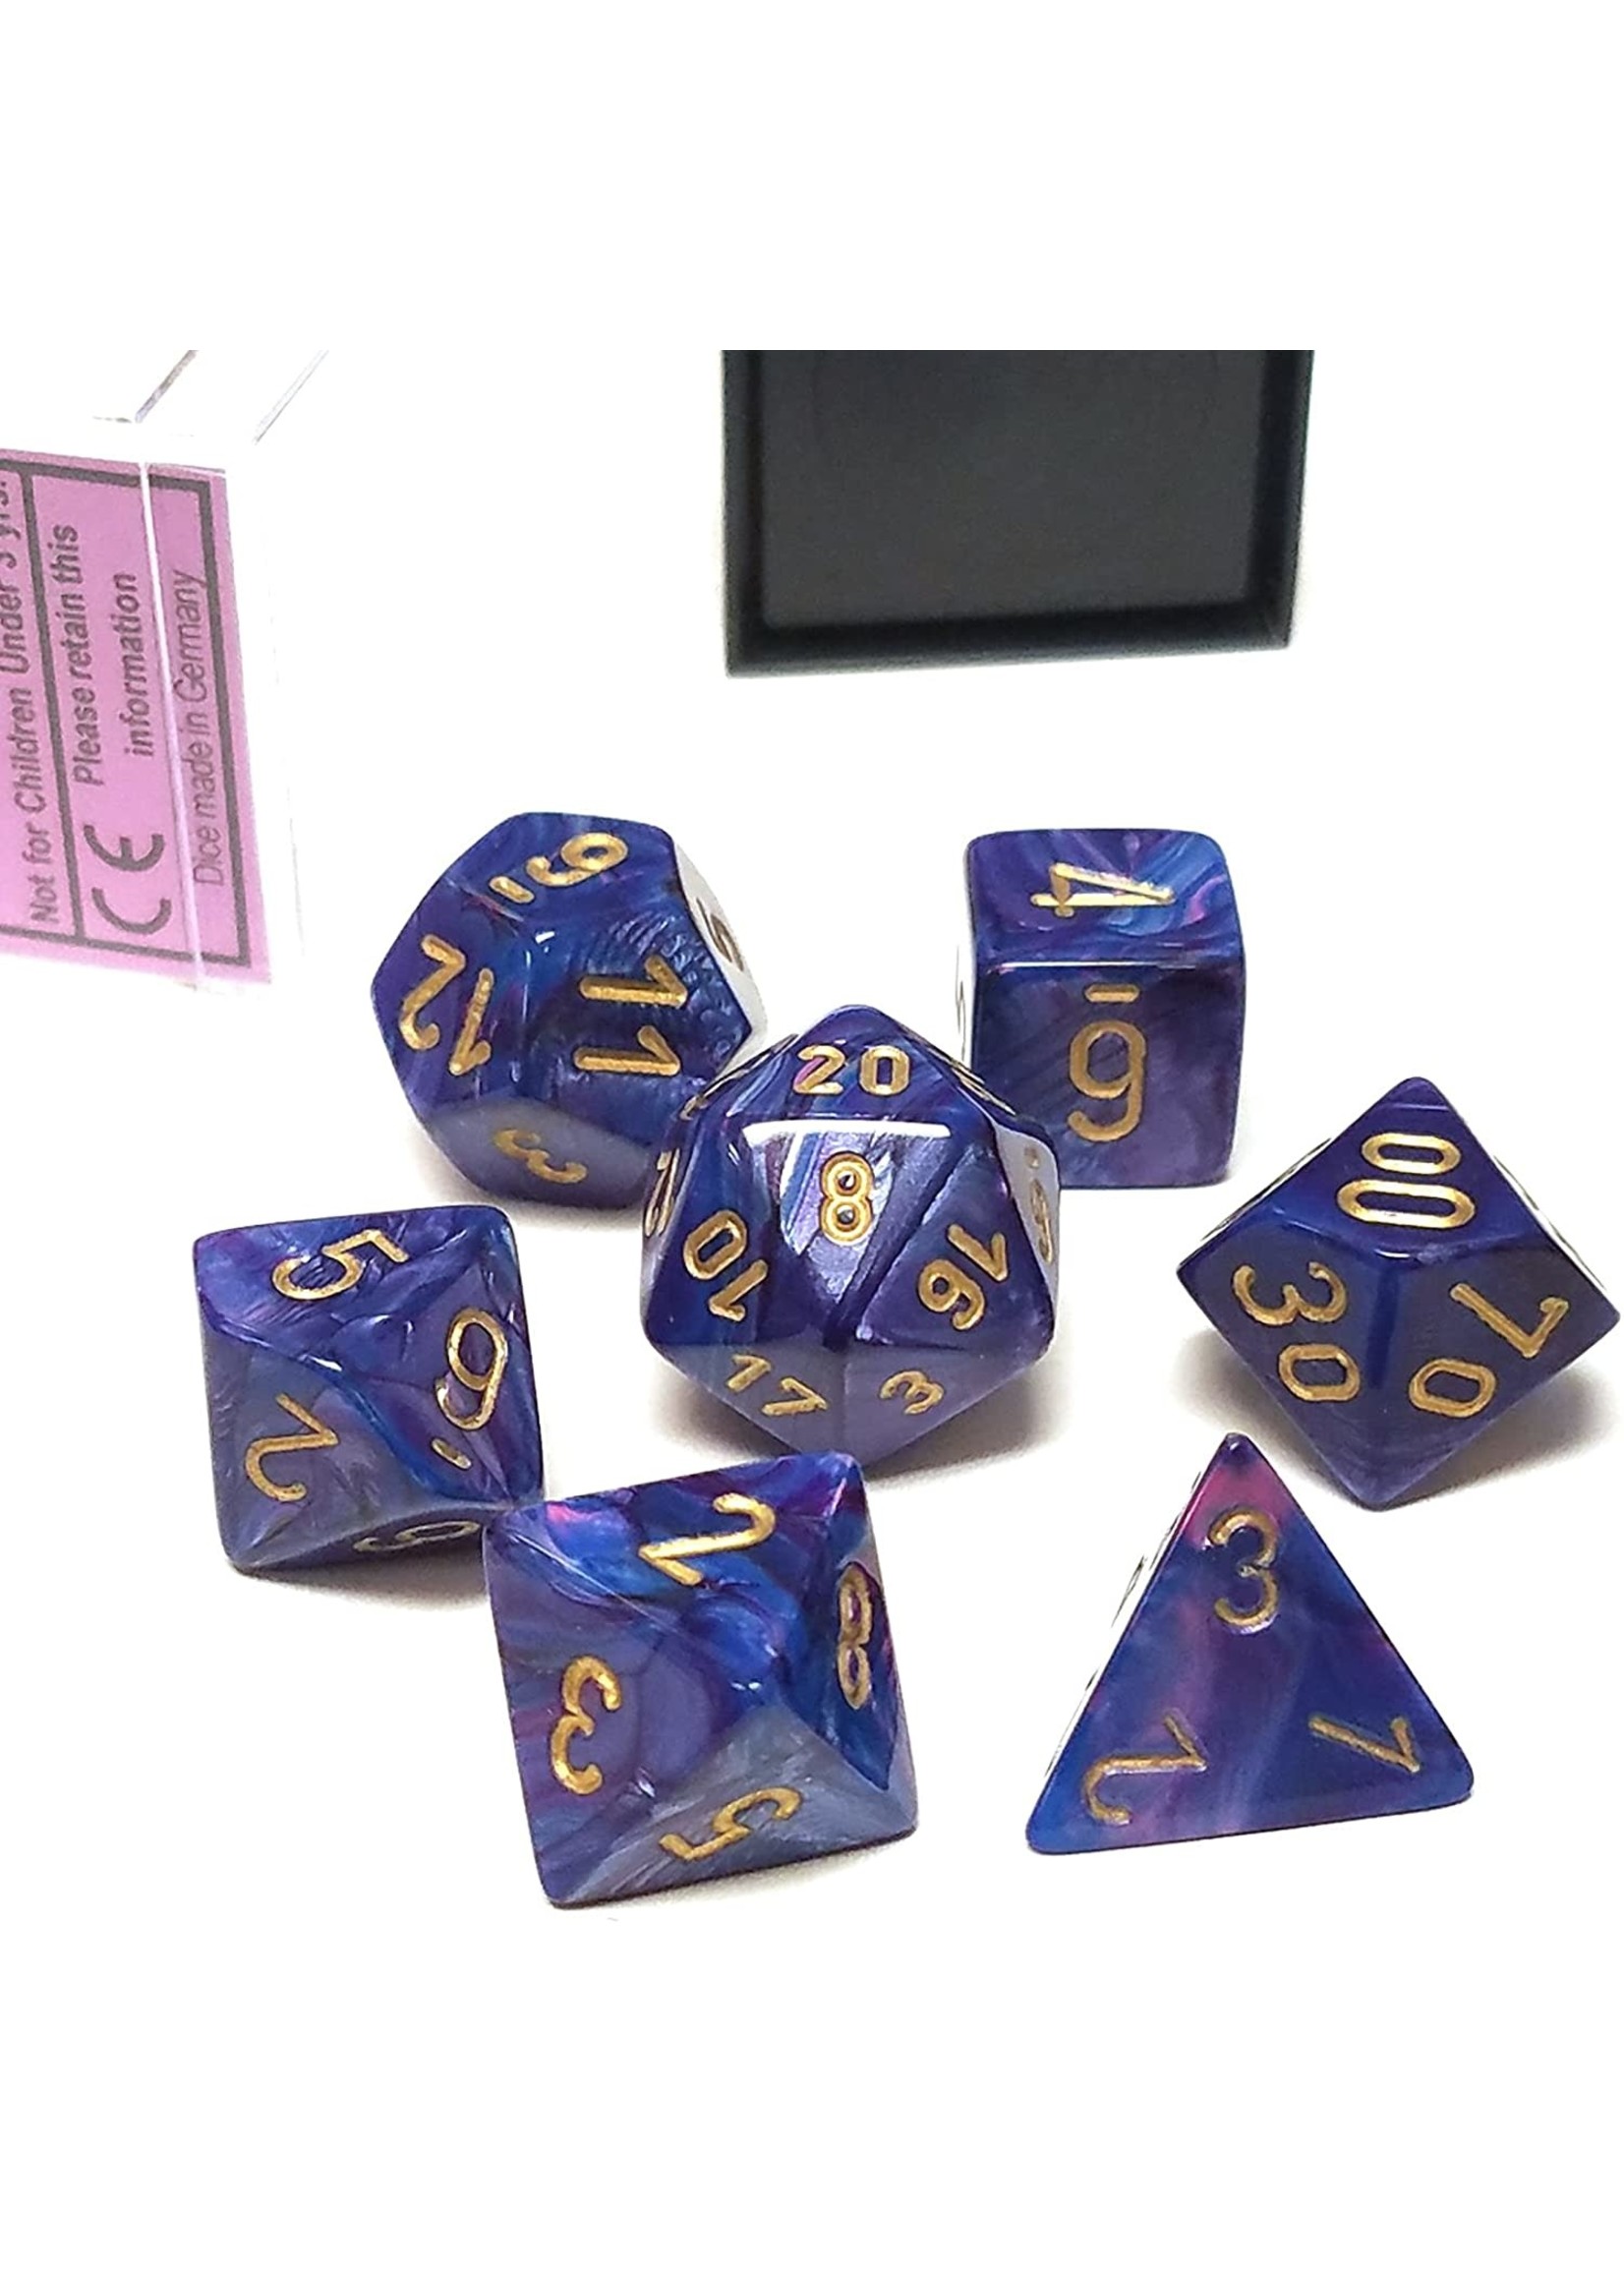 Chessex Lustrous Poly 7 set: Purple w/ Gold